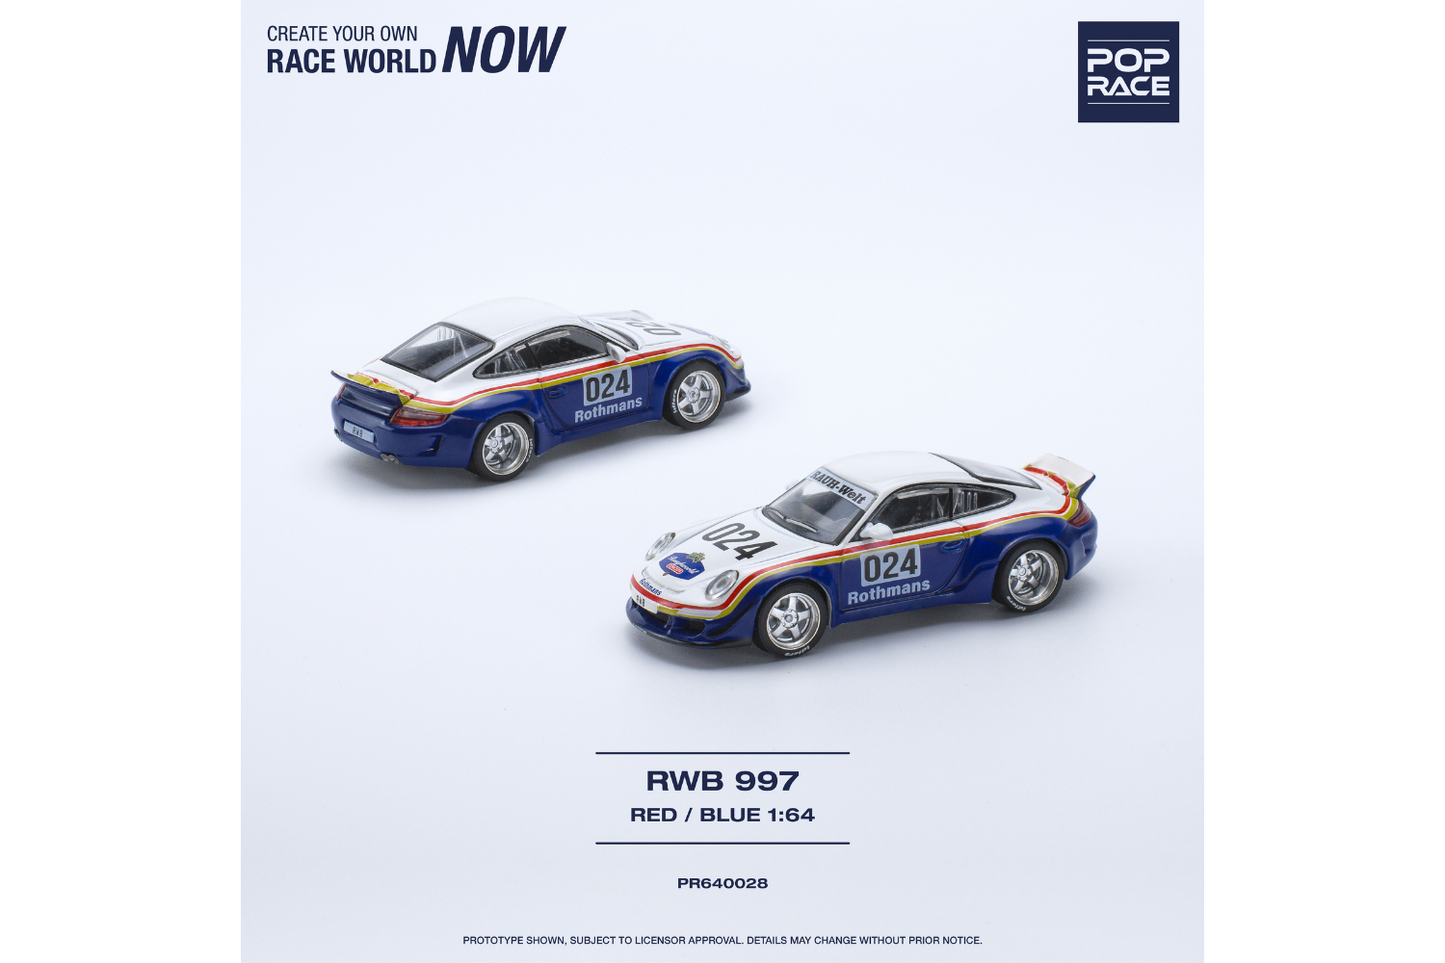 Pop Race 1/64 Porsche 911 RWB997 in Rothmans Livery